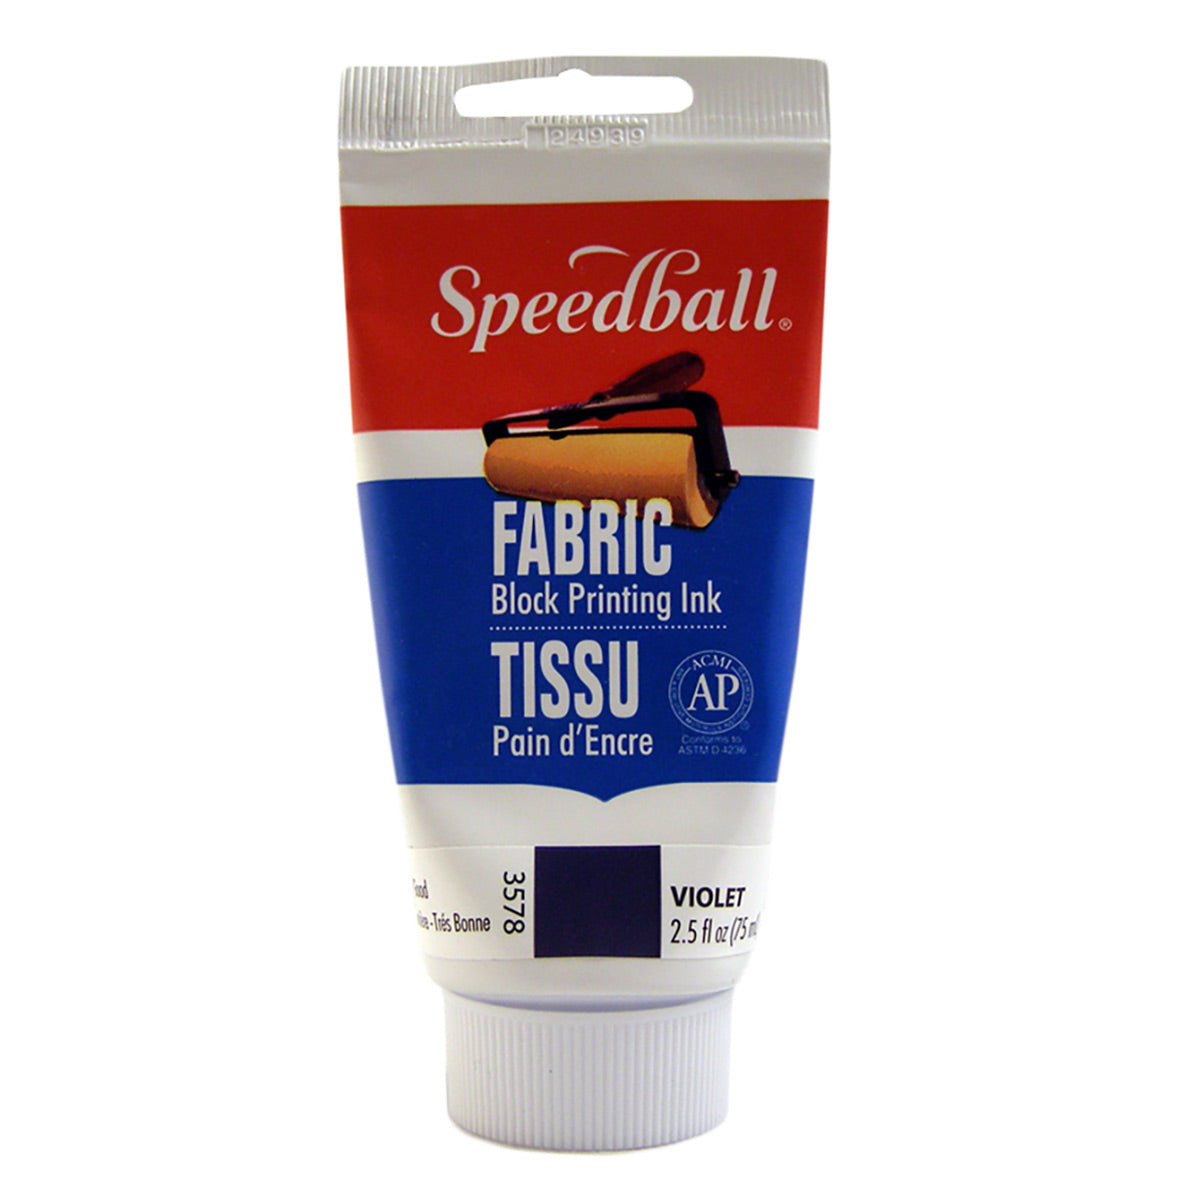 Speedball - Fabric Block Printing Ink 75ml (2.5oz) - Violet